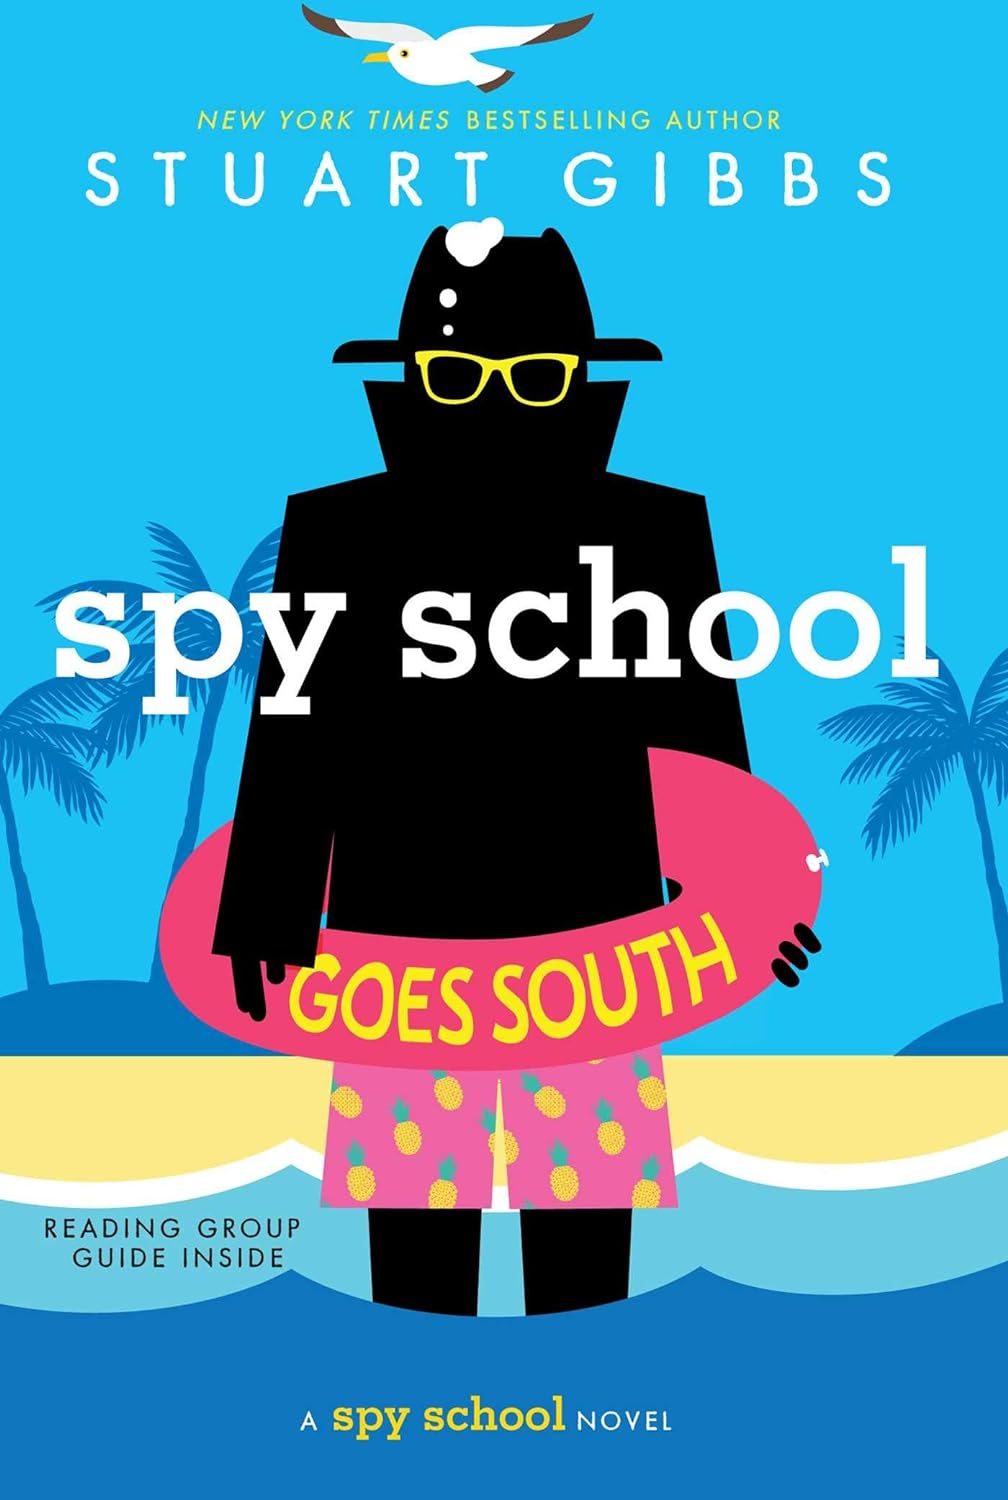 Spy School Goes South - by Stuart Gibbs